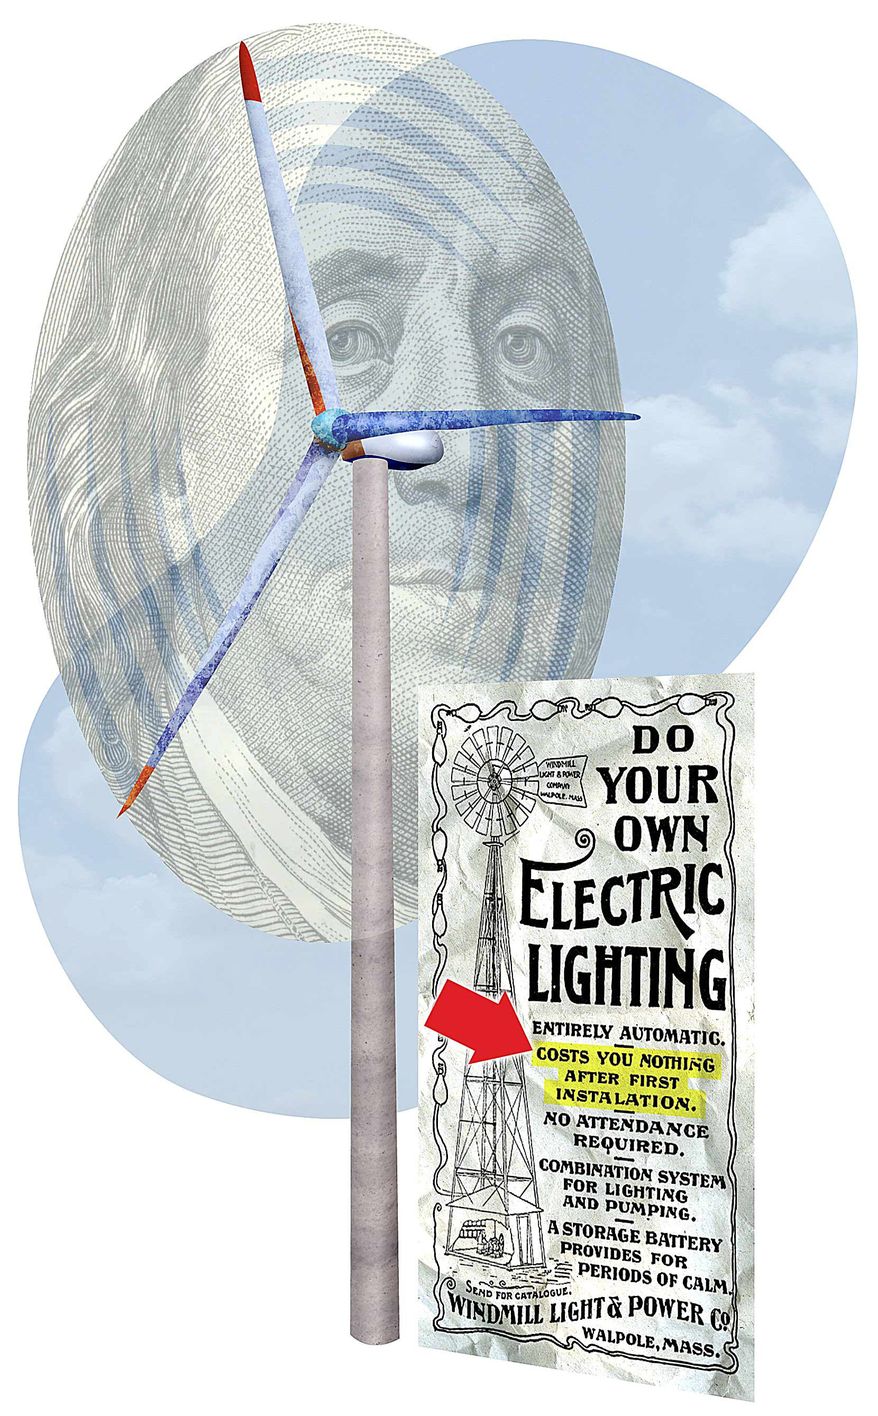 Wind Turbine Illustration by Greg Groesch/The Washington Times